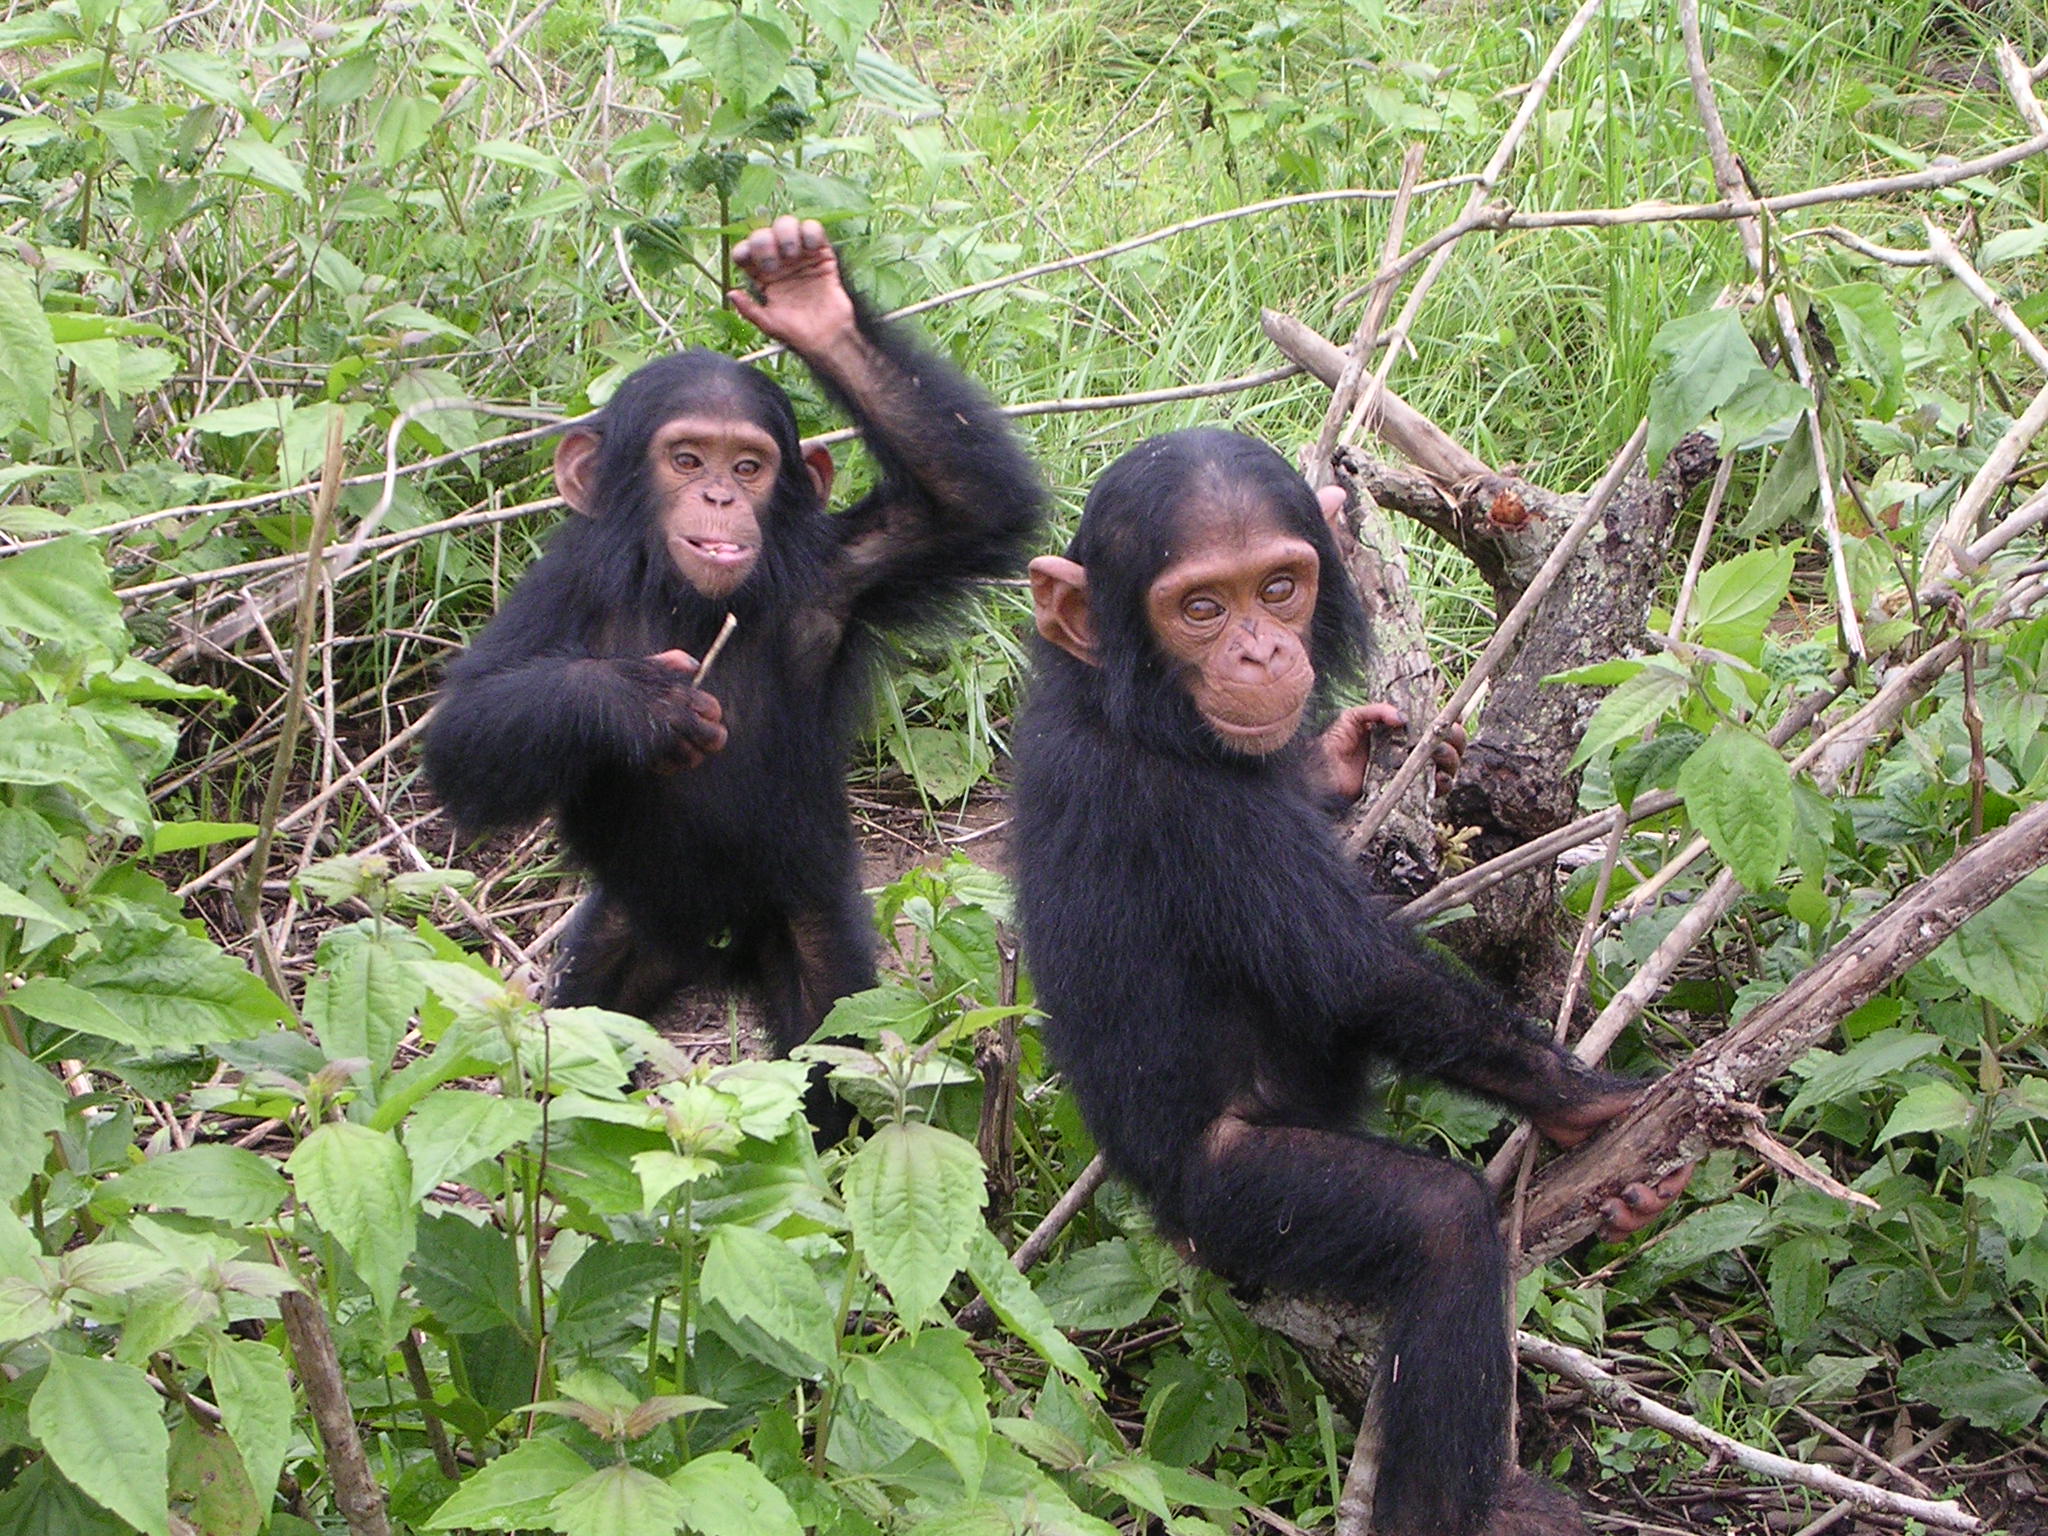 Дальней родственник человека. Шимпанзе. Шимпанзе и человек. Наблюдения за шимпанзе. Обезьяна сидит на траве.